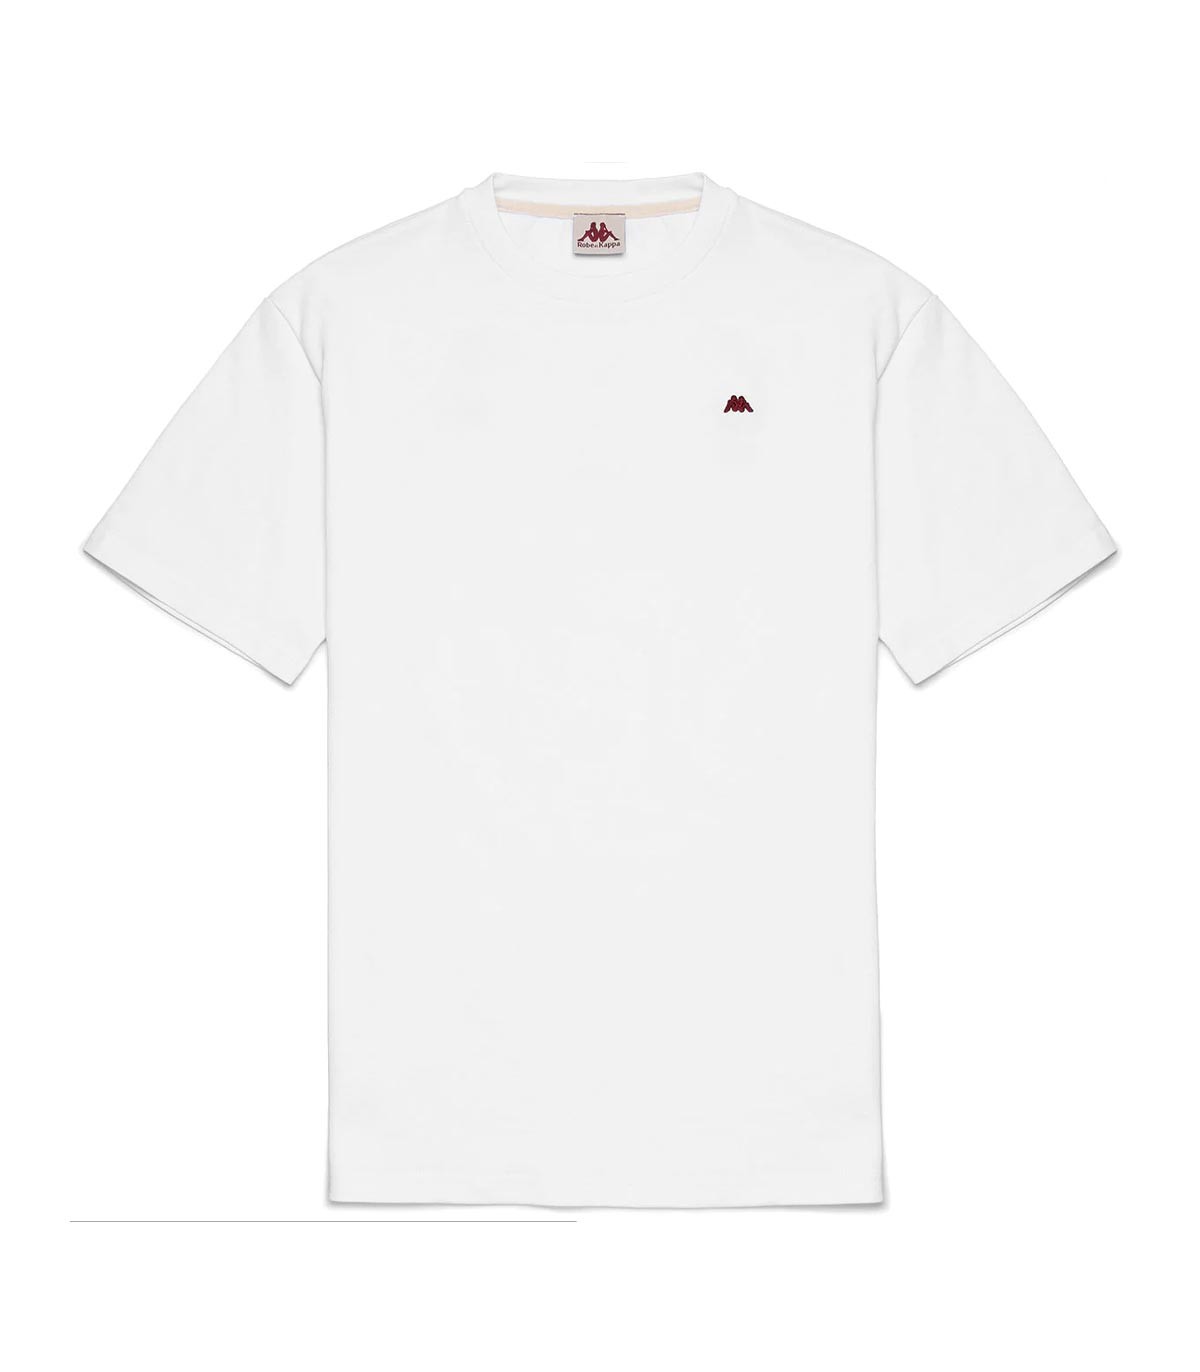 Kappa - Camiseta Darphis Unisex - Blanco